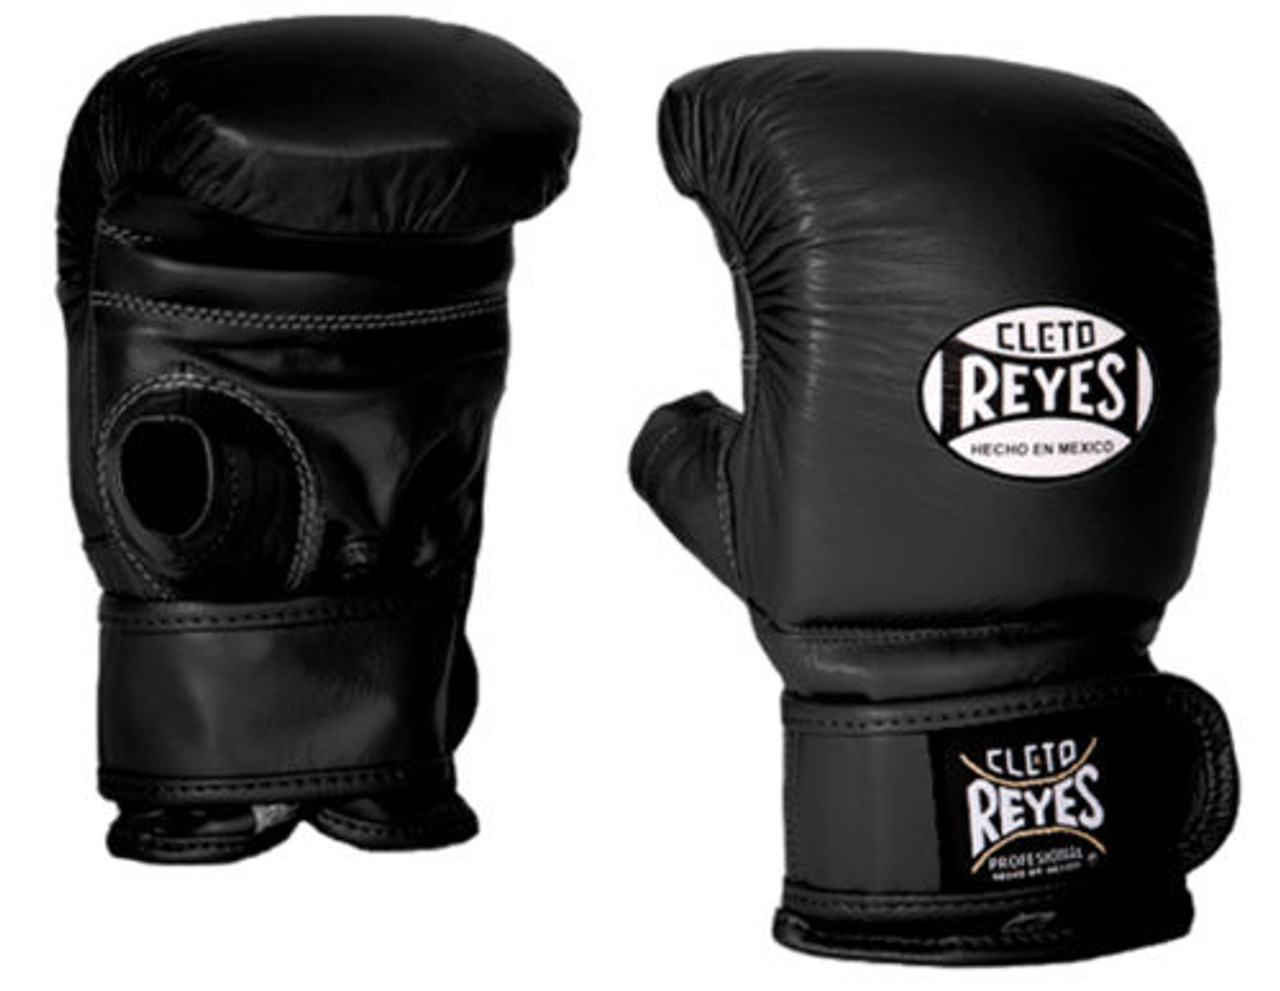 cleto reyes boxing gloves